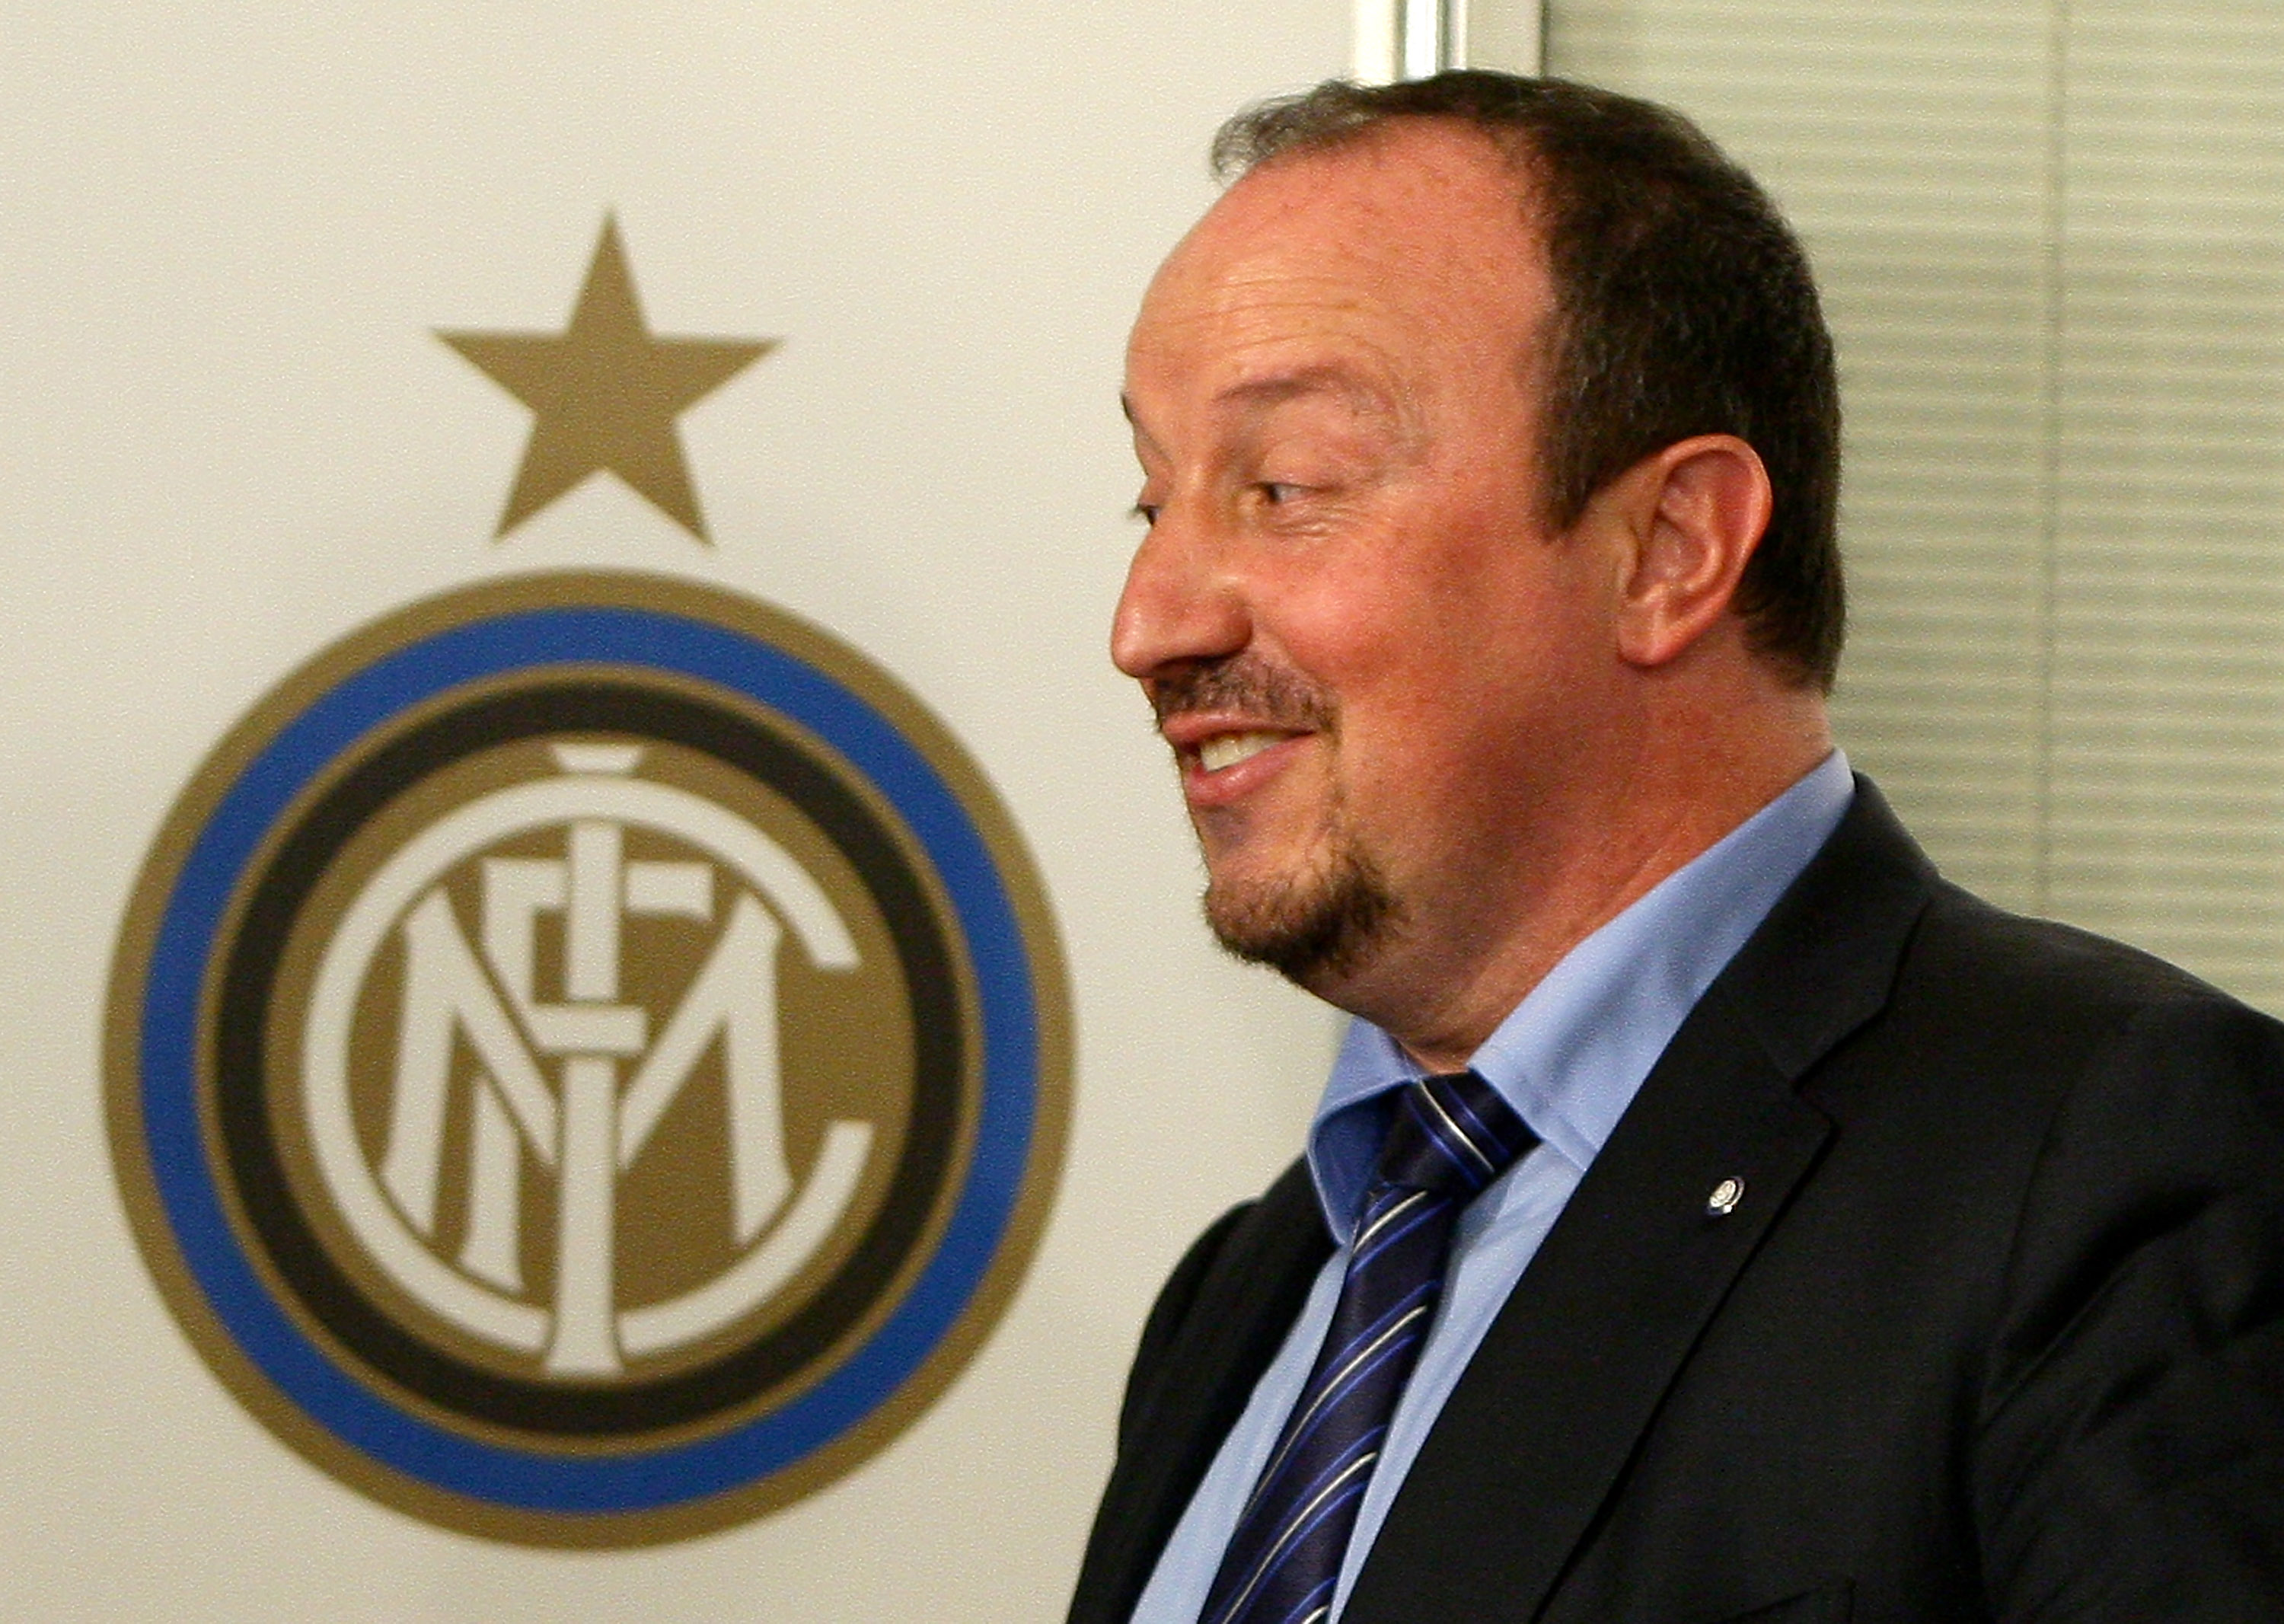 Rafa Benitez Presented As New FC Internazionale Coach